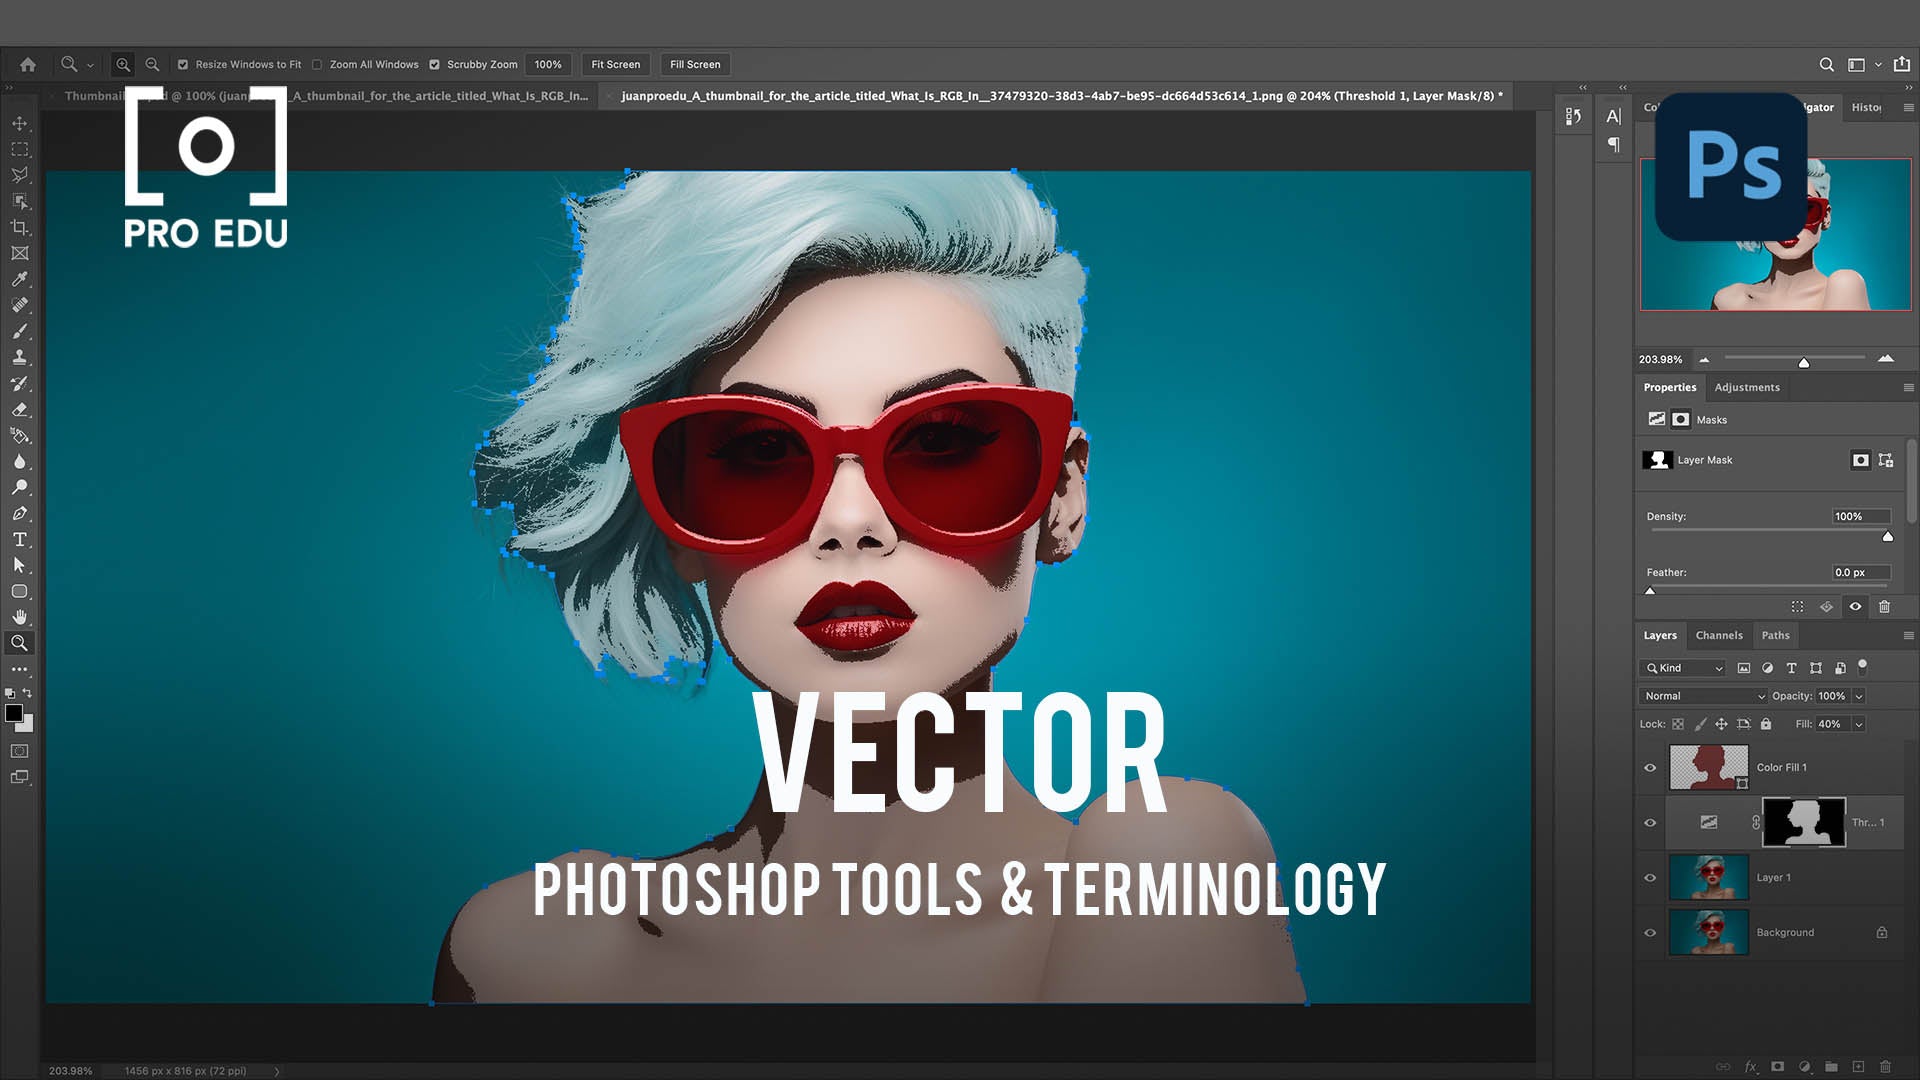 Vector Graphics Essentials in Photoshop - PRO EDU Guide